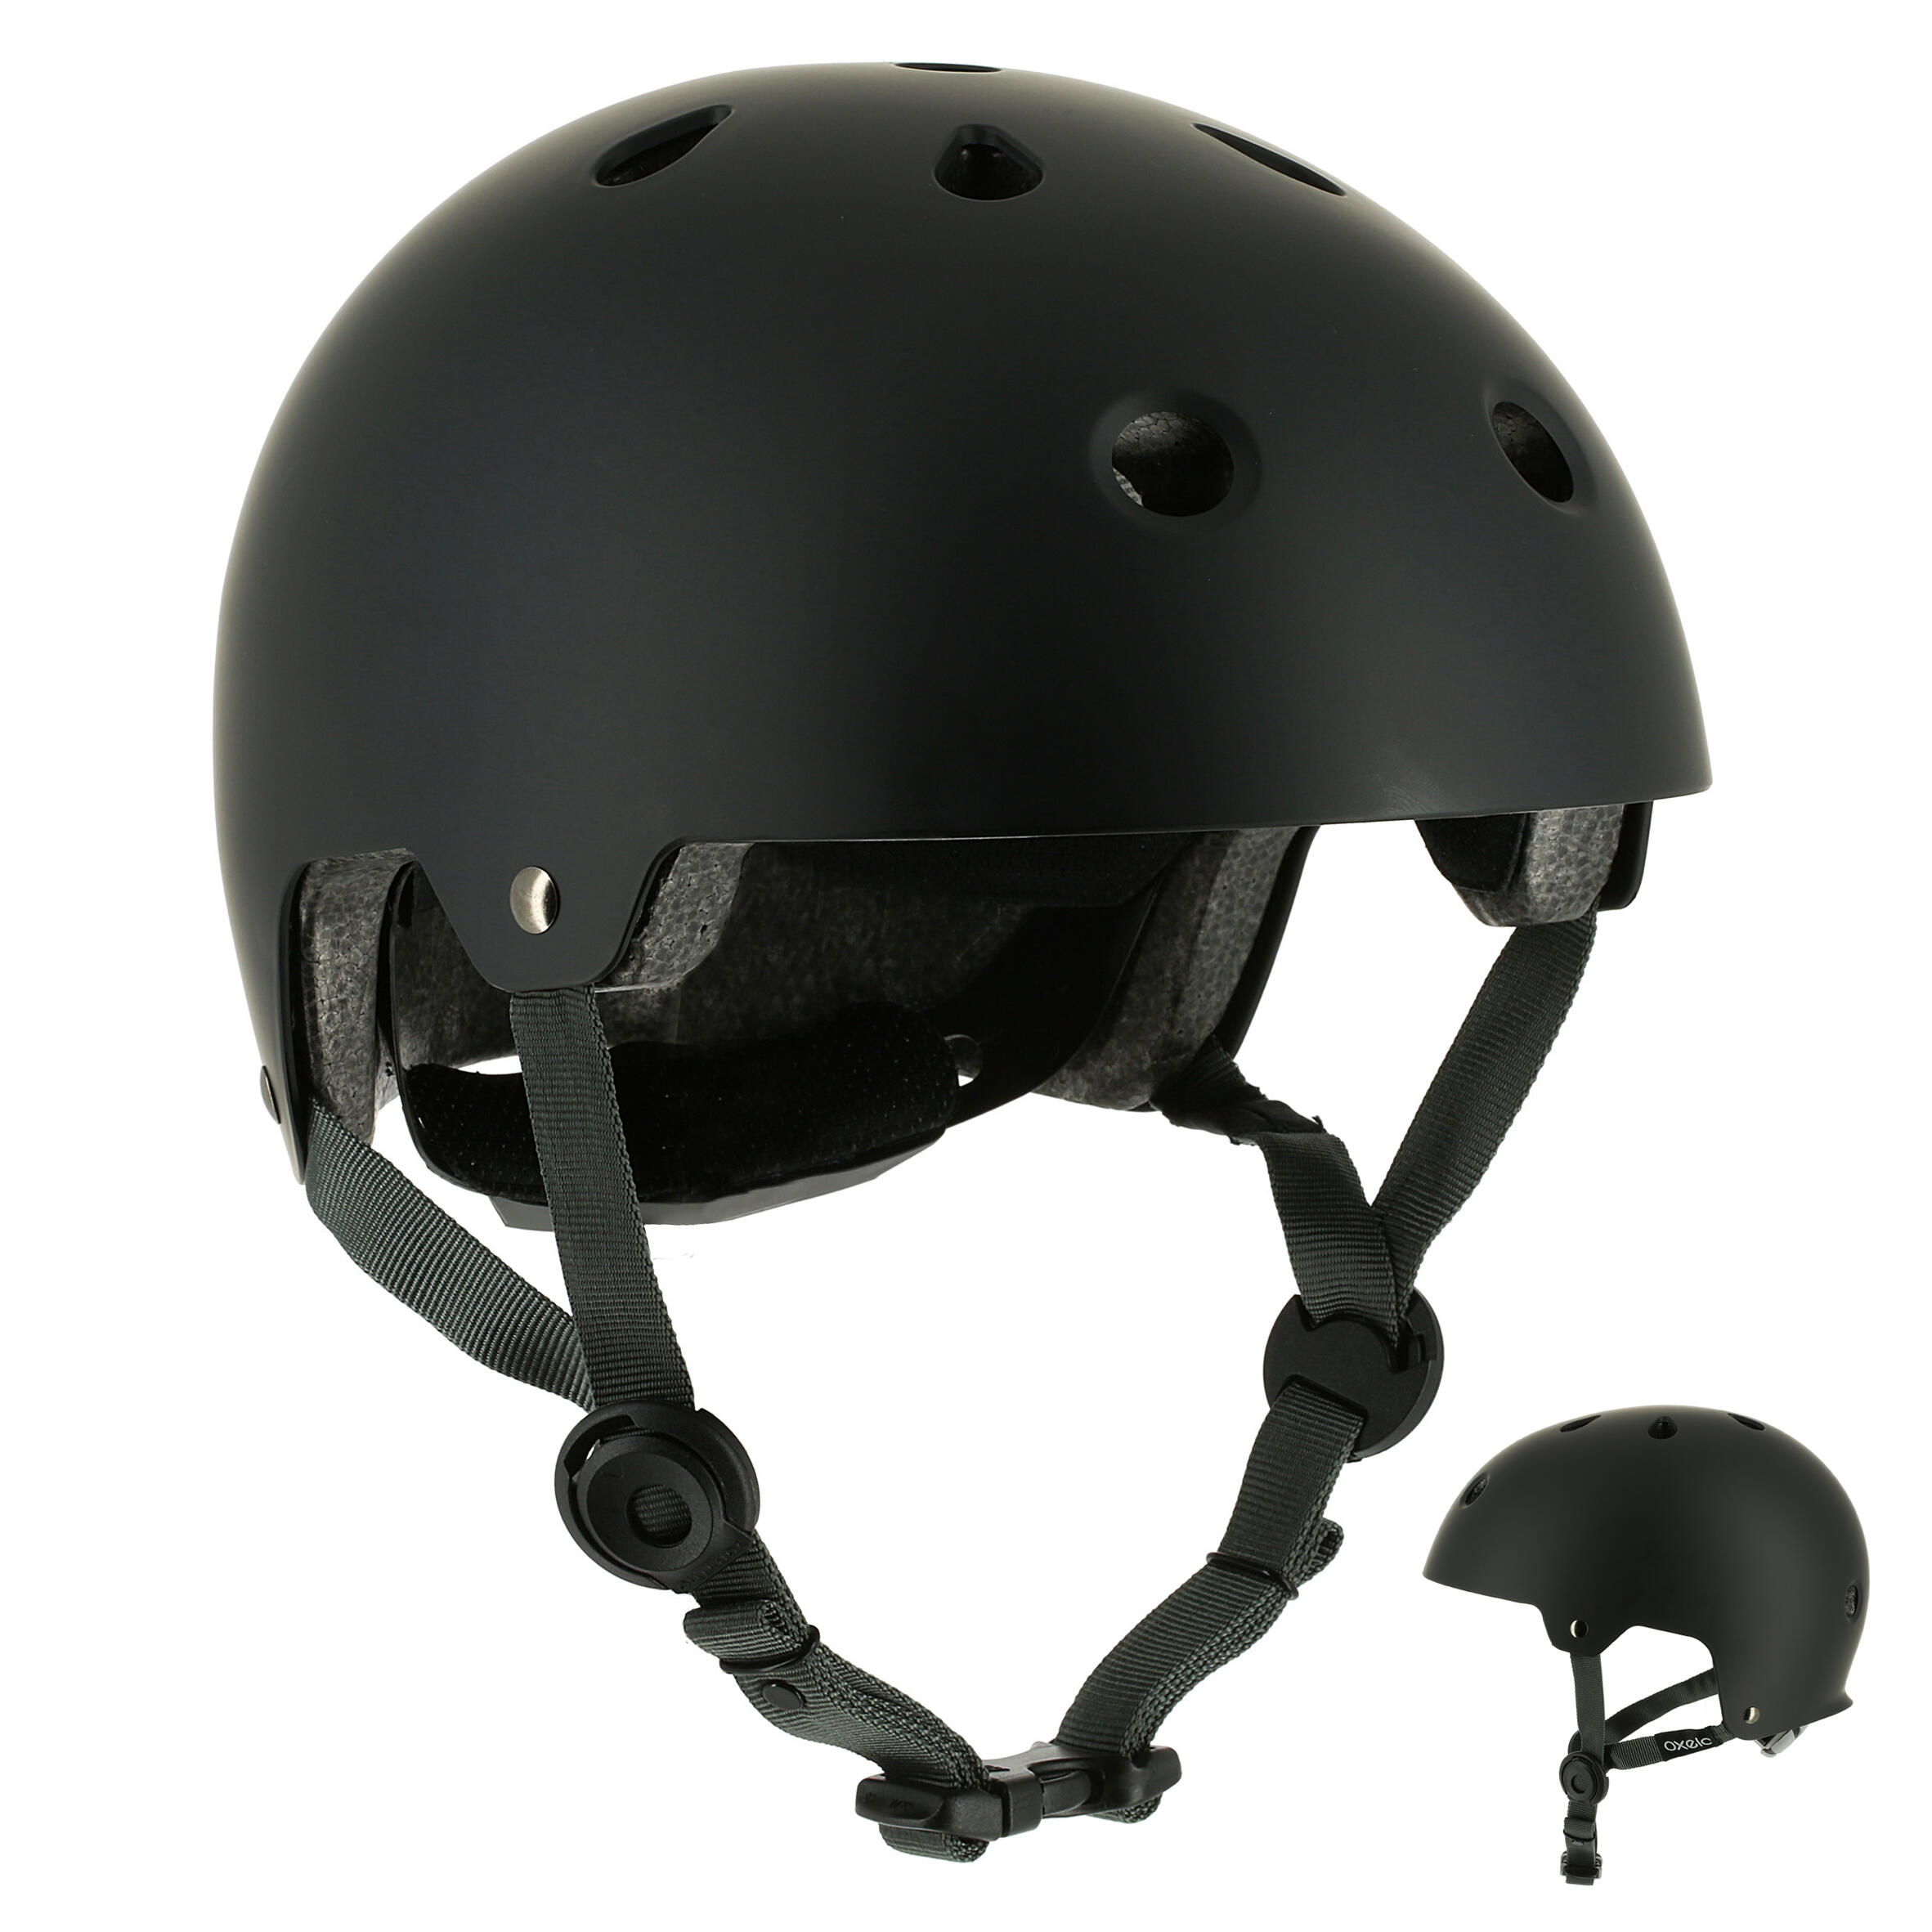 BMX Bicycle Cycling Scooter Ski Skate Skateboard Protective Helmet Black XS L 